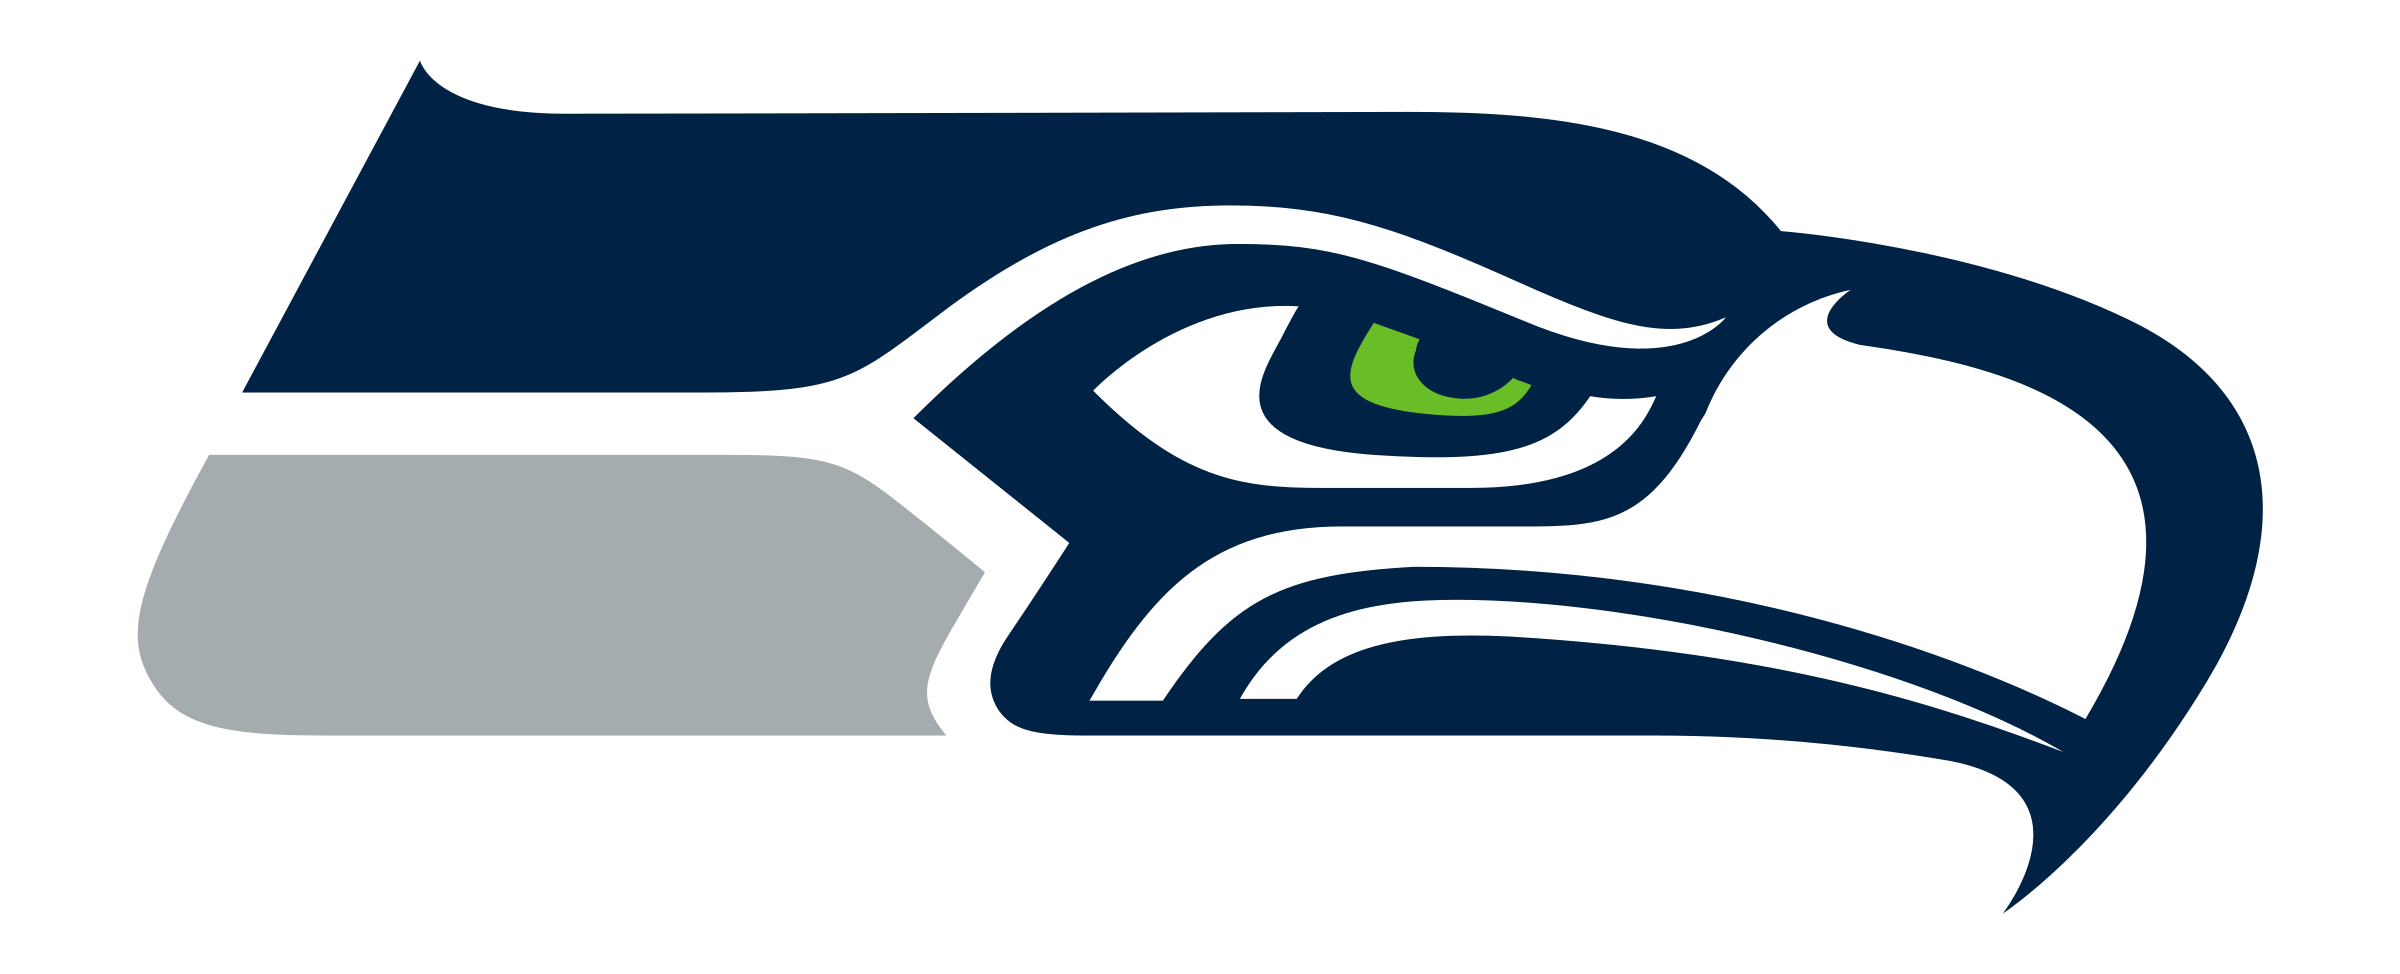 Seahawks Logo - Seattle Seahawks Logo PNG Transparent & SVG Vector - Freebie Supply